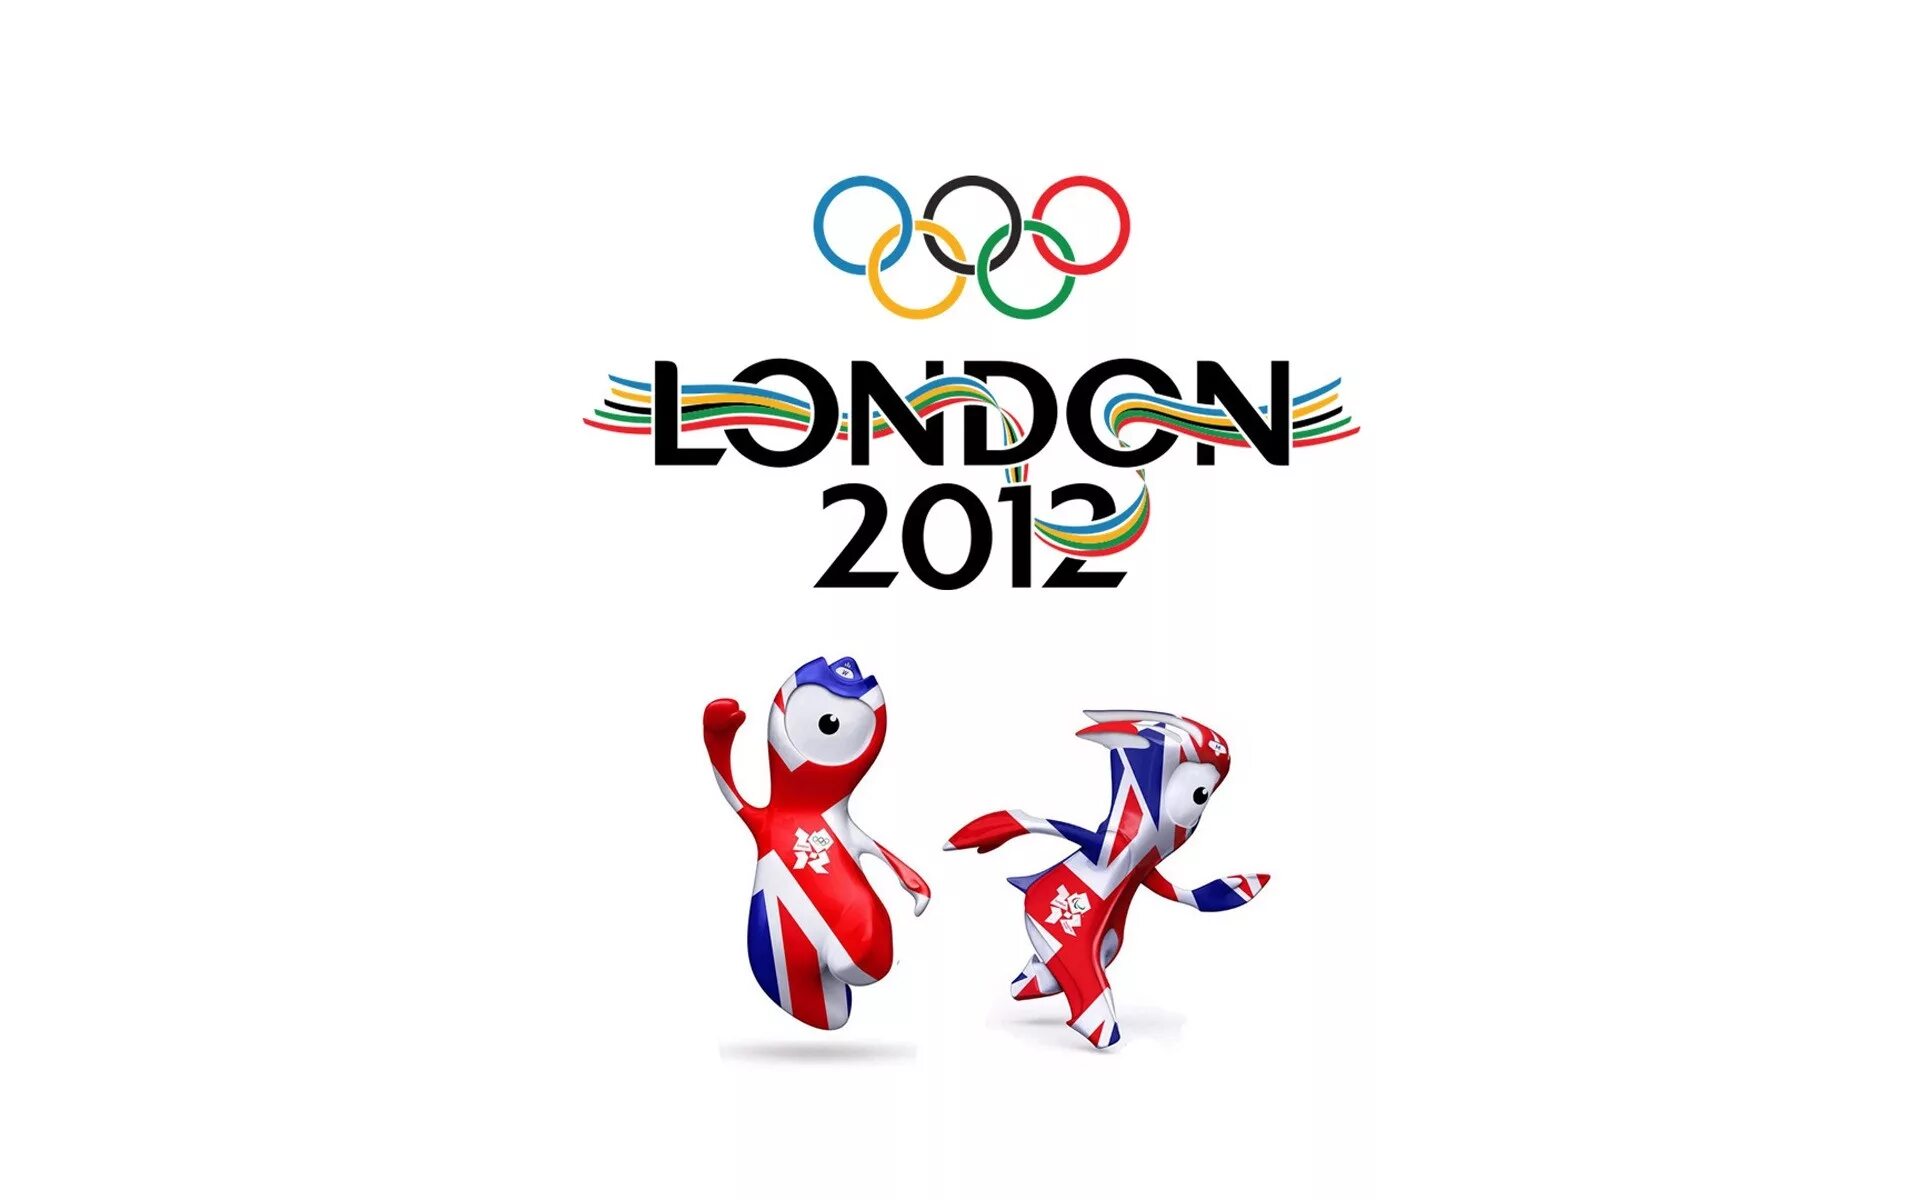 Талисманы Олимпийских игр в Лондоне 2012. Олимпийские игры в Лондоне 2012. Летние Олимпийские игры 2012 года в Лондоне.